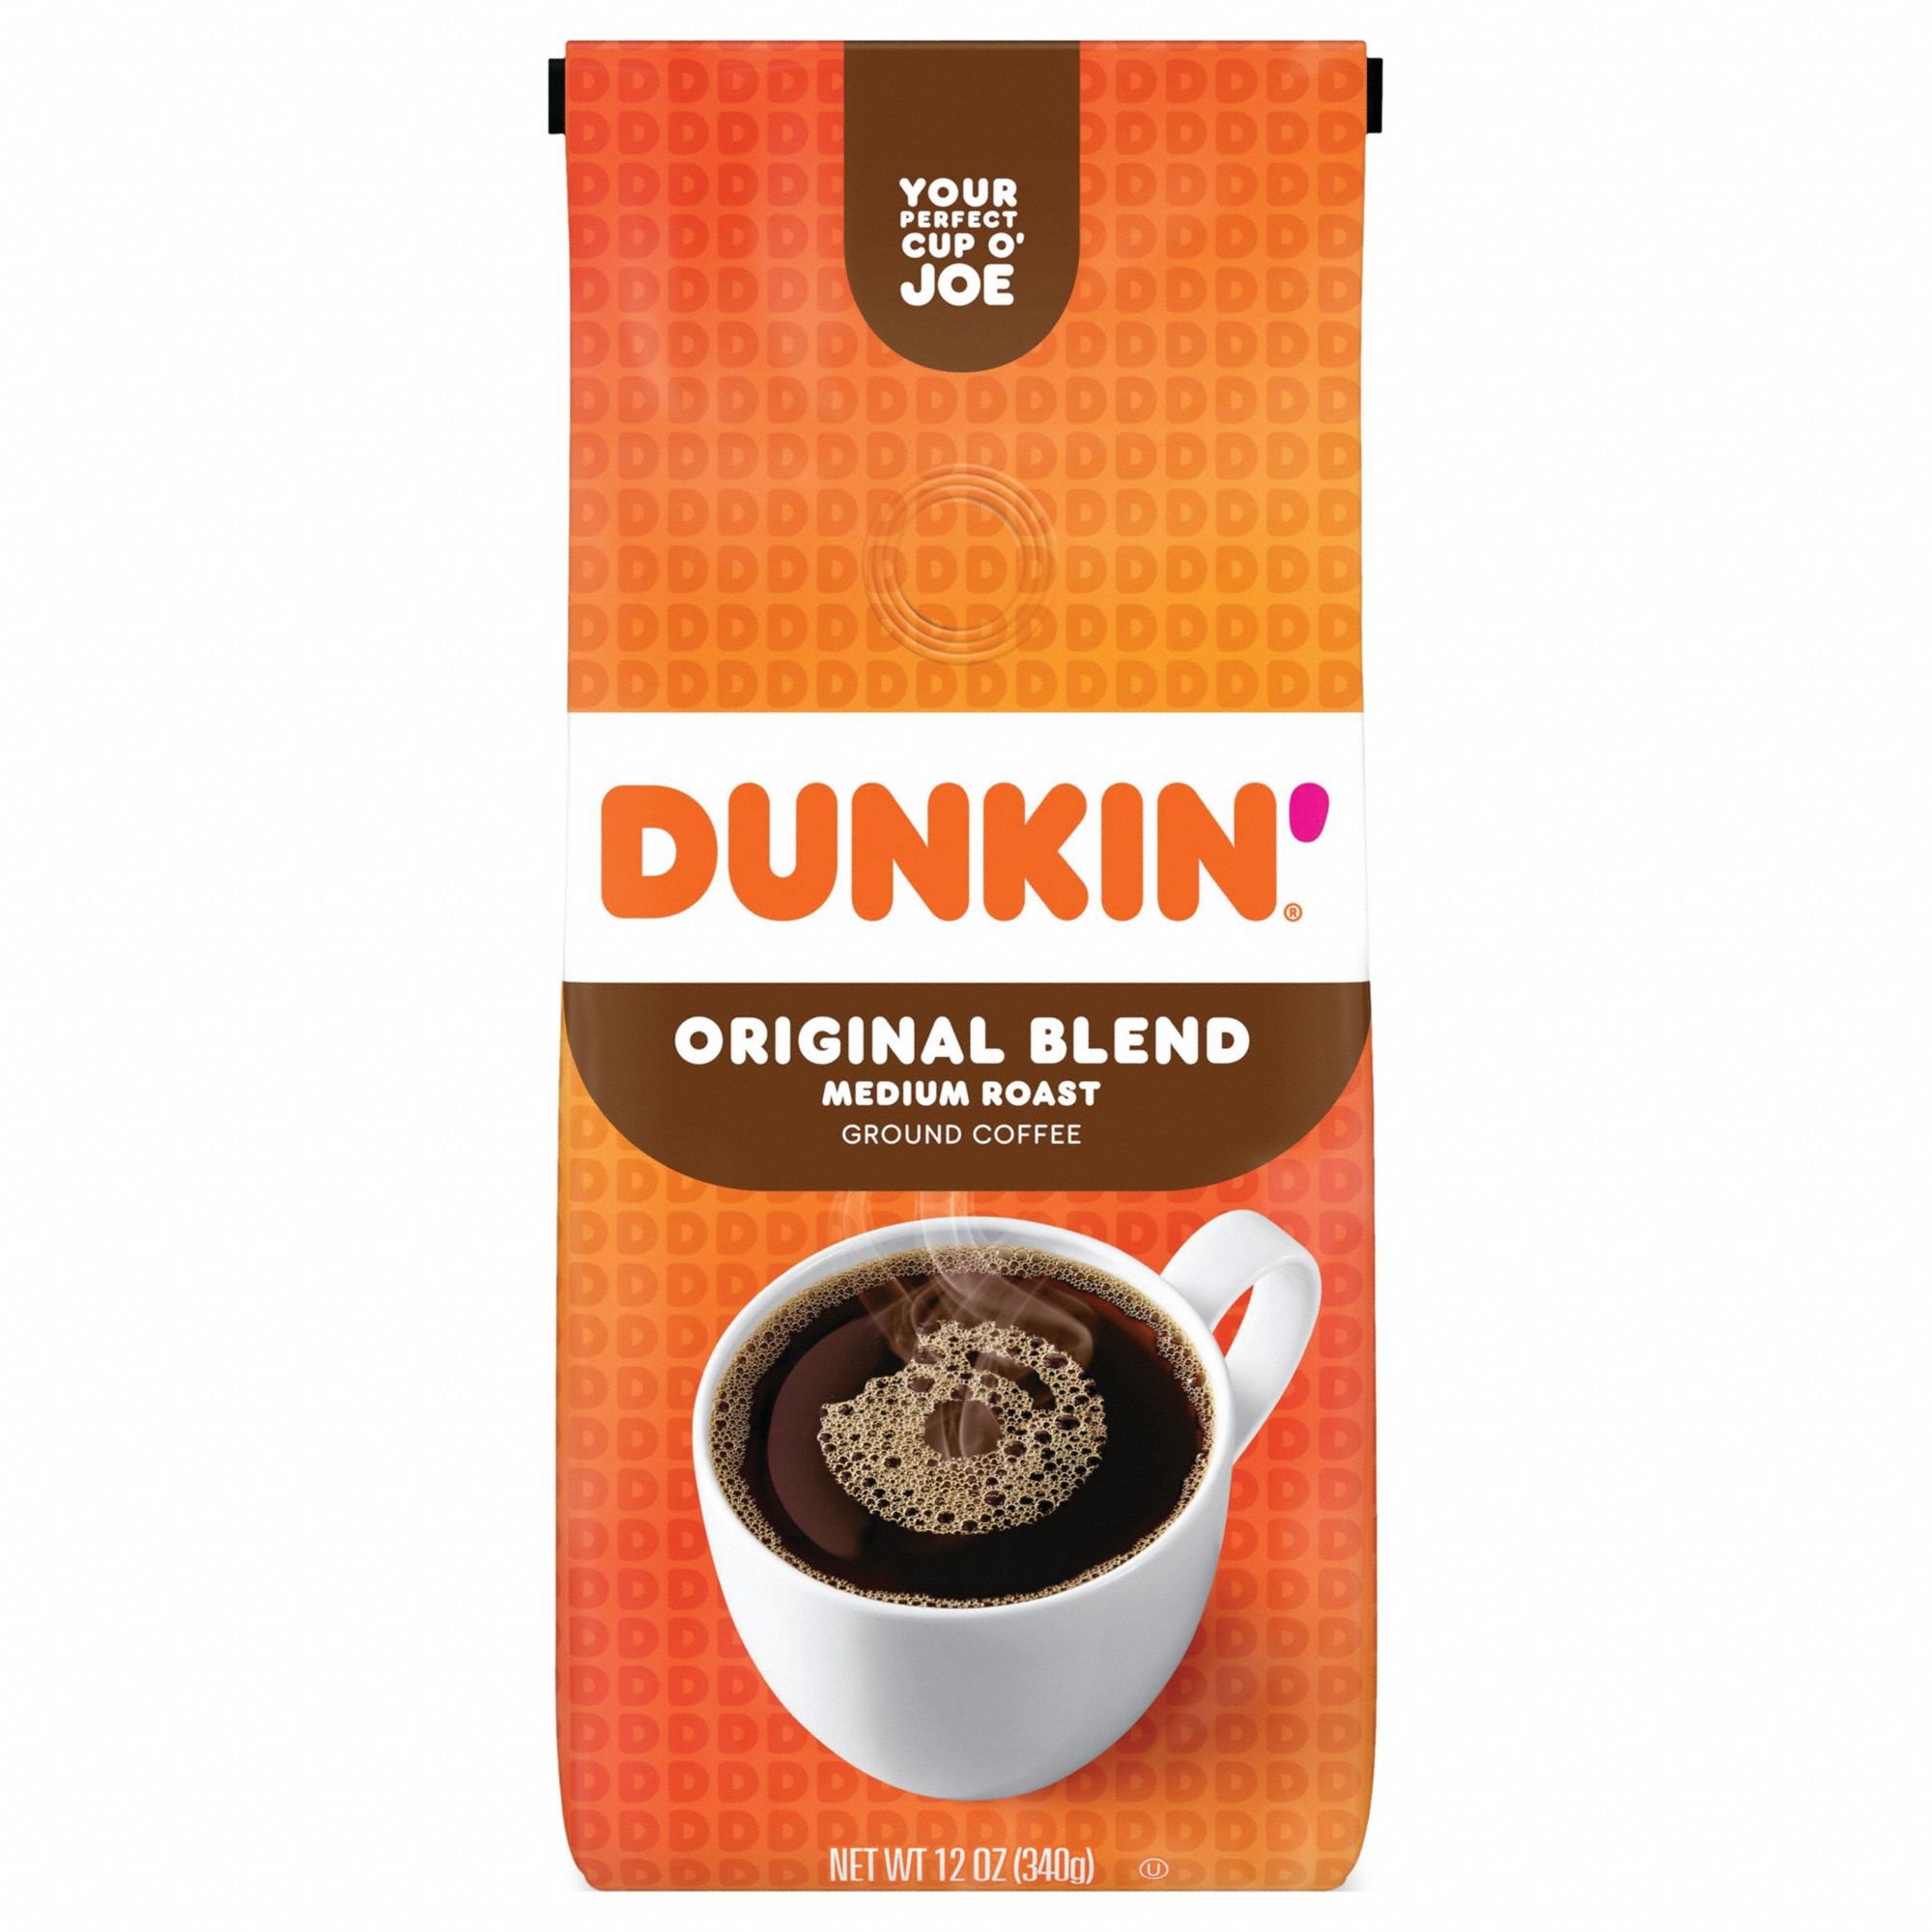 Coffee: Caffeinated, Original Blend, Bag, 0.9 lb Pack Wt, 12 oz Net Wt, Medium, Ground